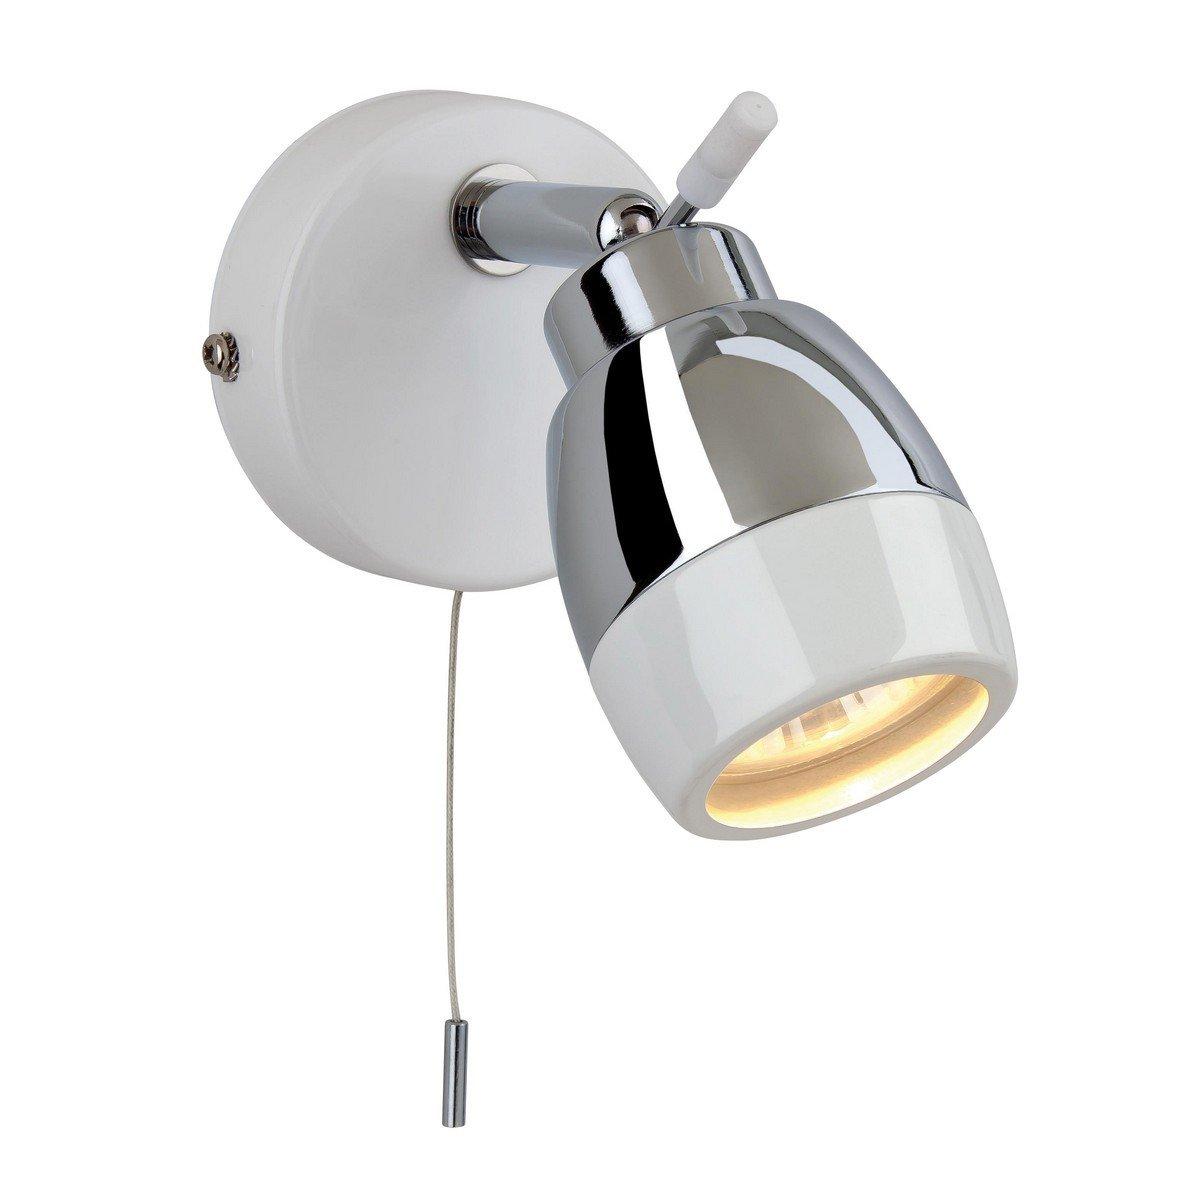 Marine 1 Light Single Switched Bathroom Ceiling Spotlight White Chrome IP44 GU10